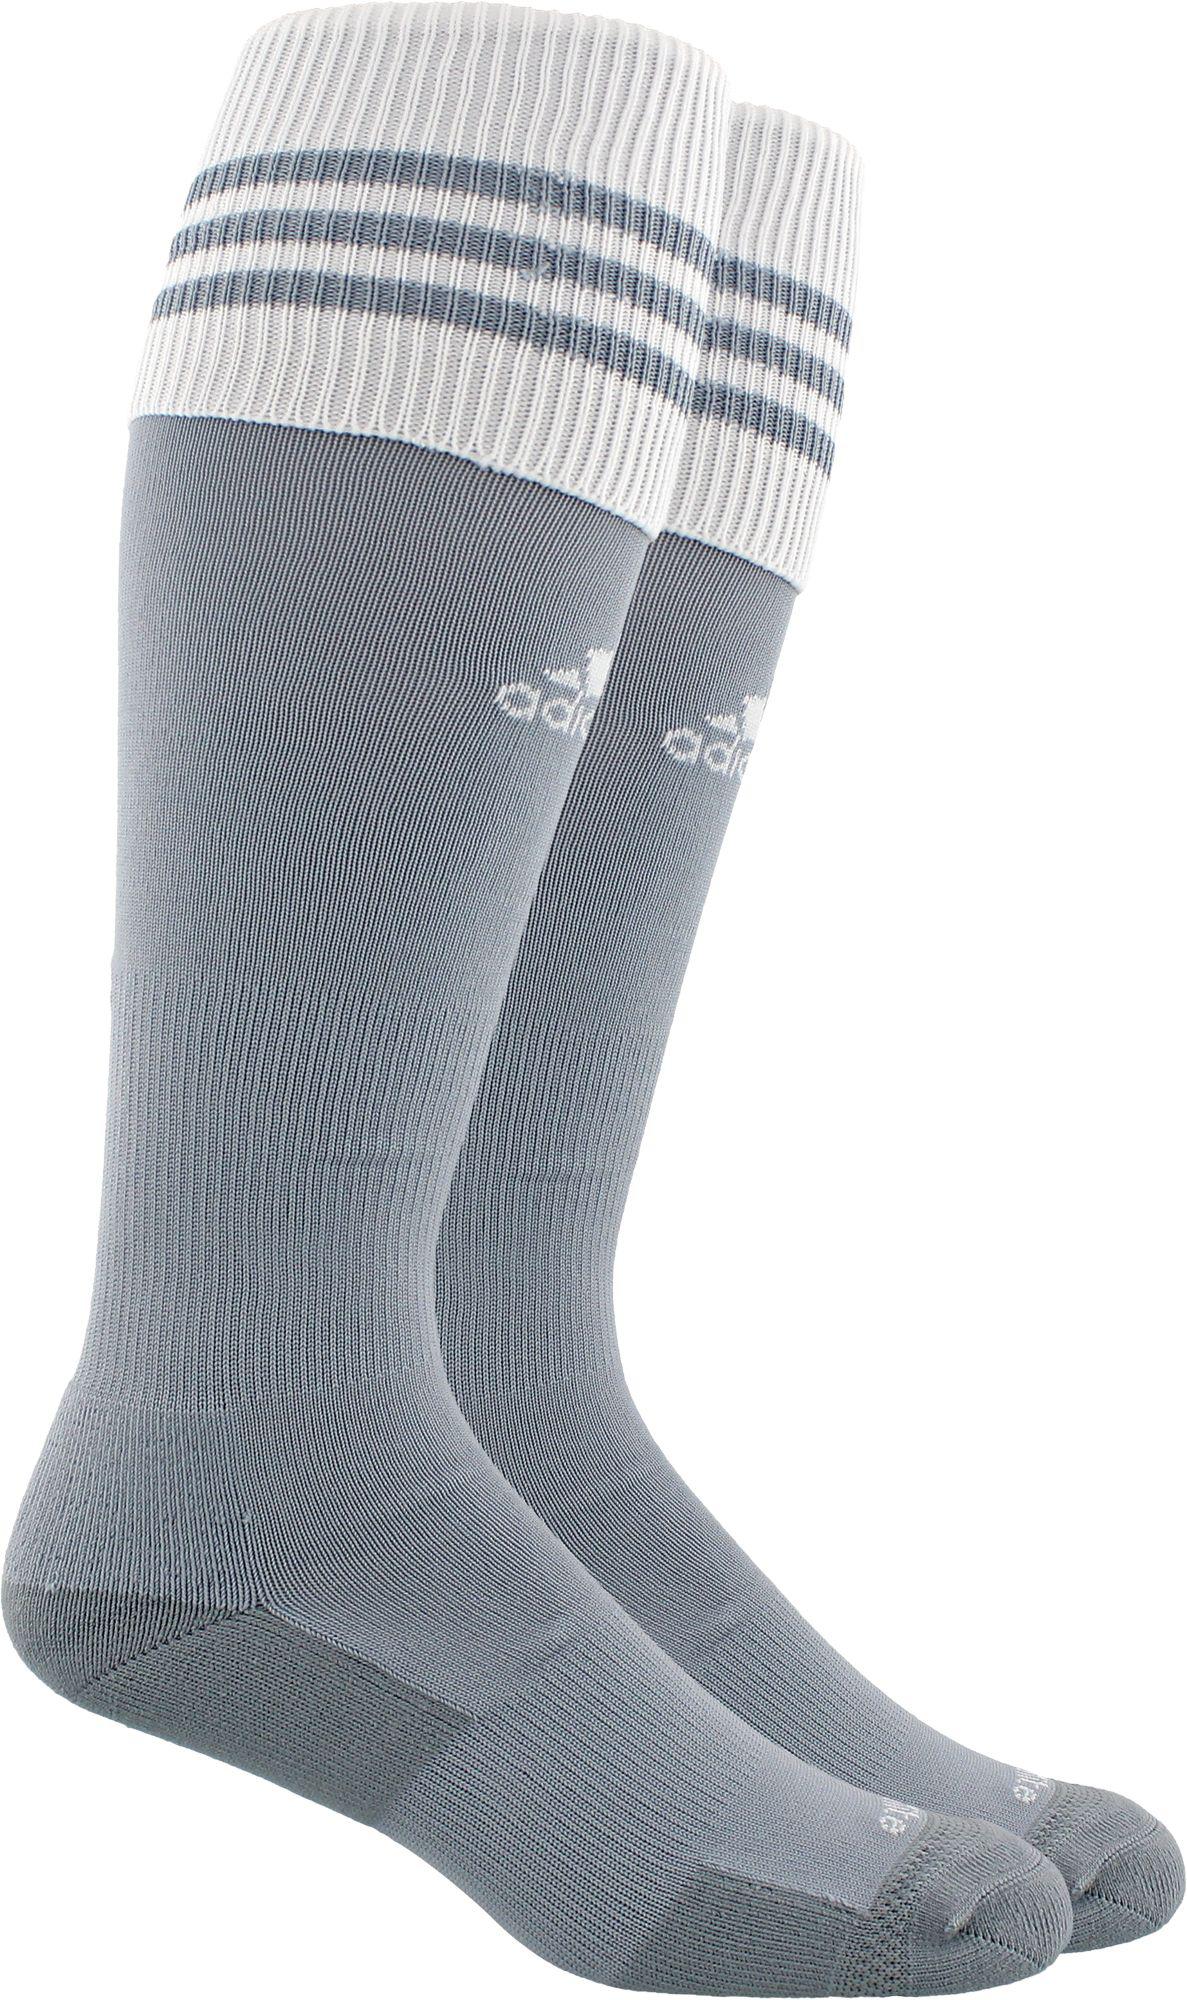 grey adidas socks